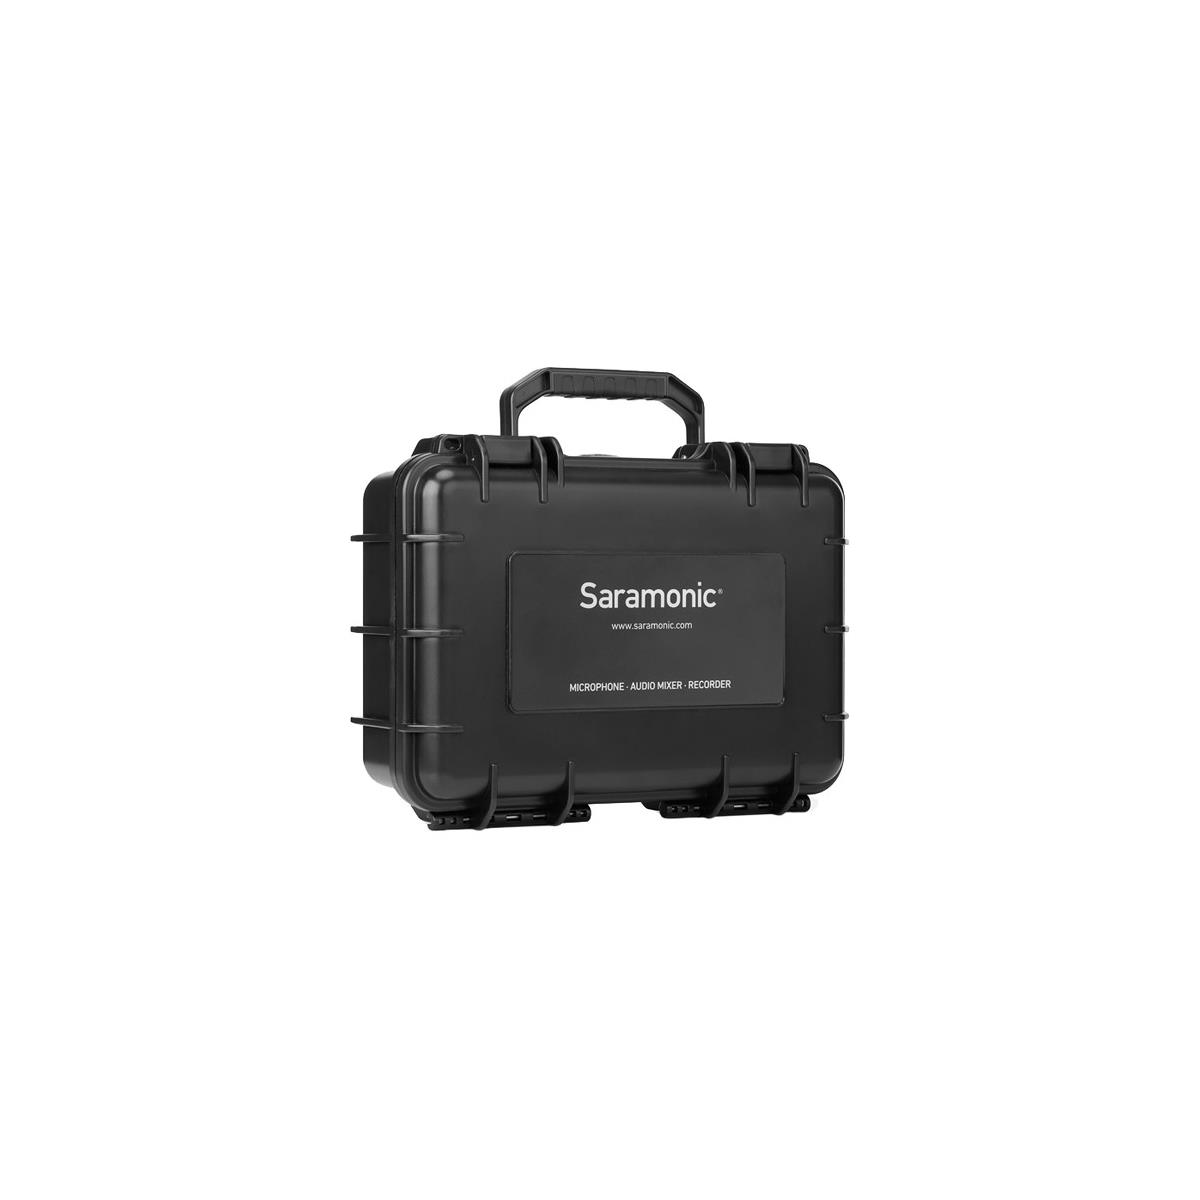 Saramonic SR-C8 Watertight Dustproof Carry-On Case (Large)